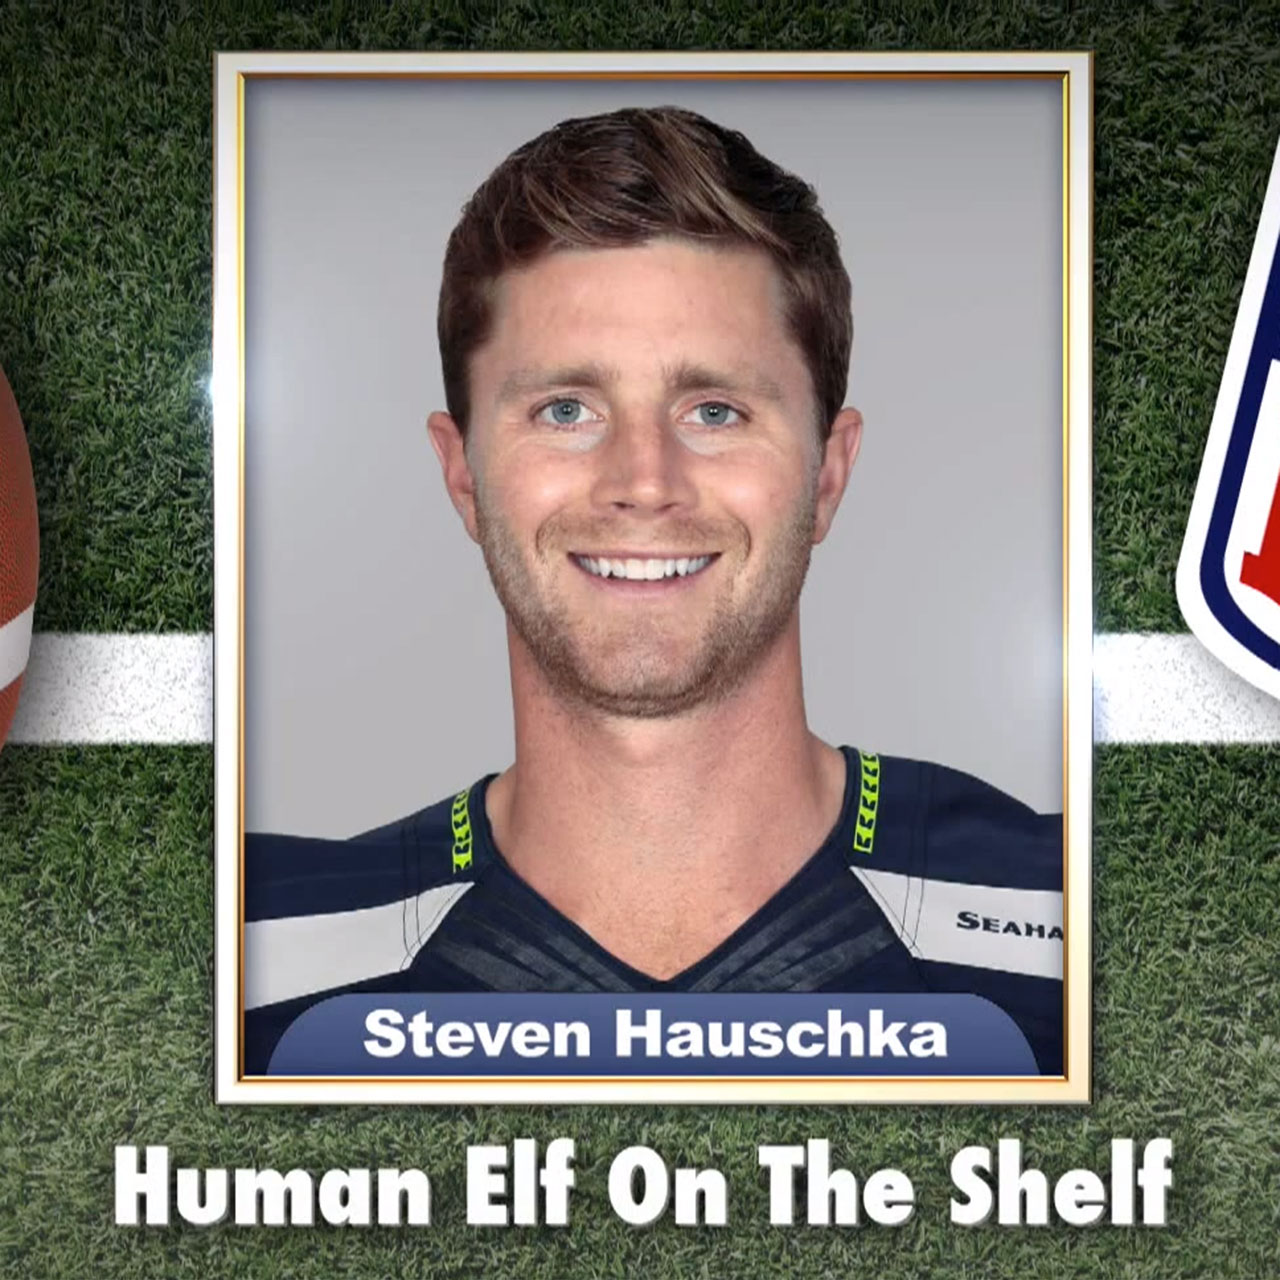 Seahawks' Steven Hauschka is the "Human Elf On The Shelf"